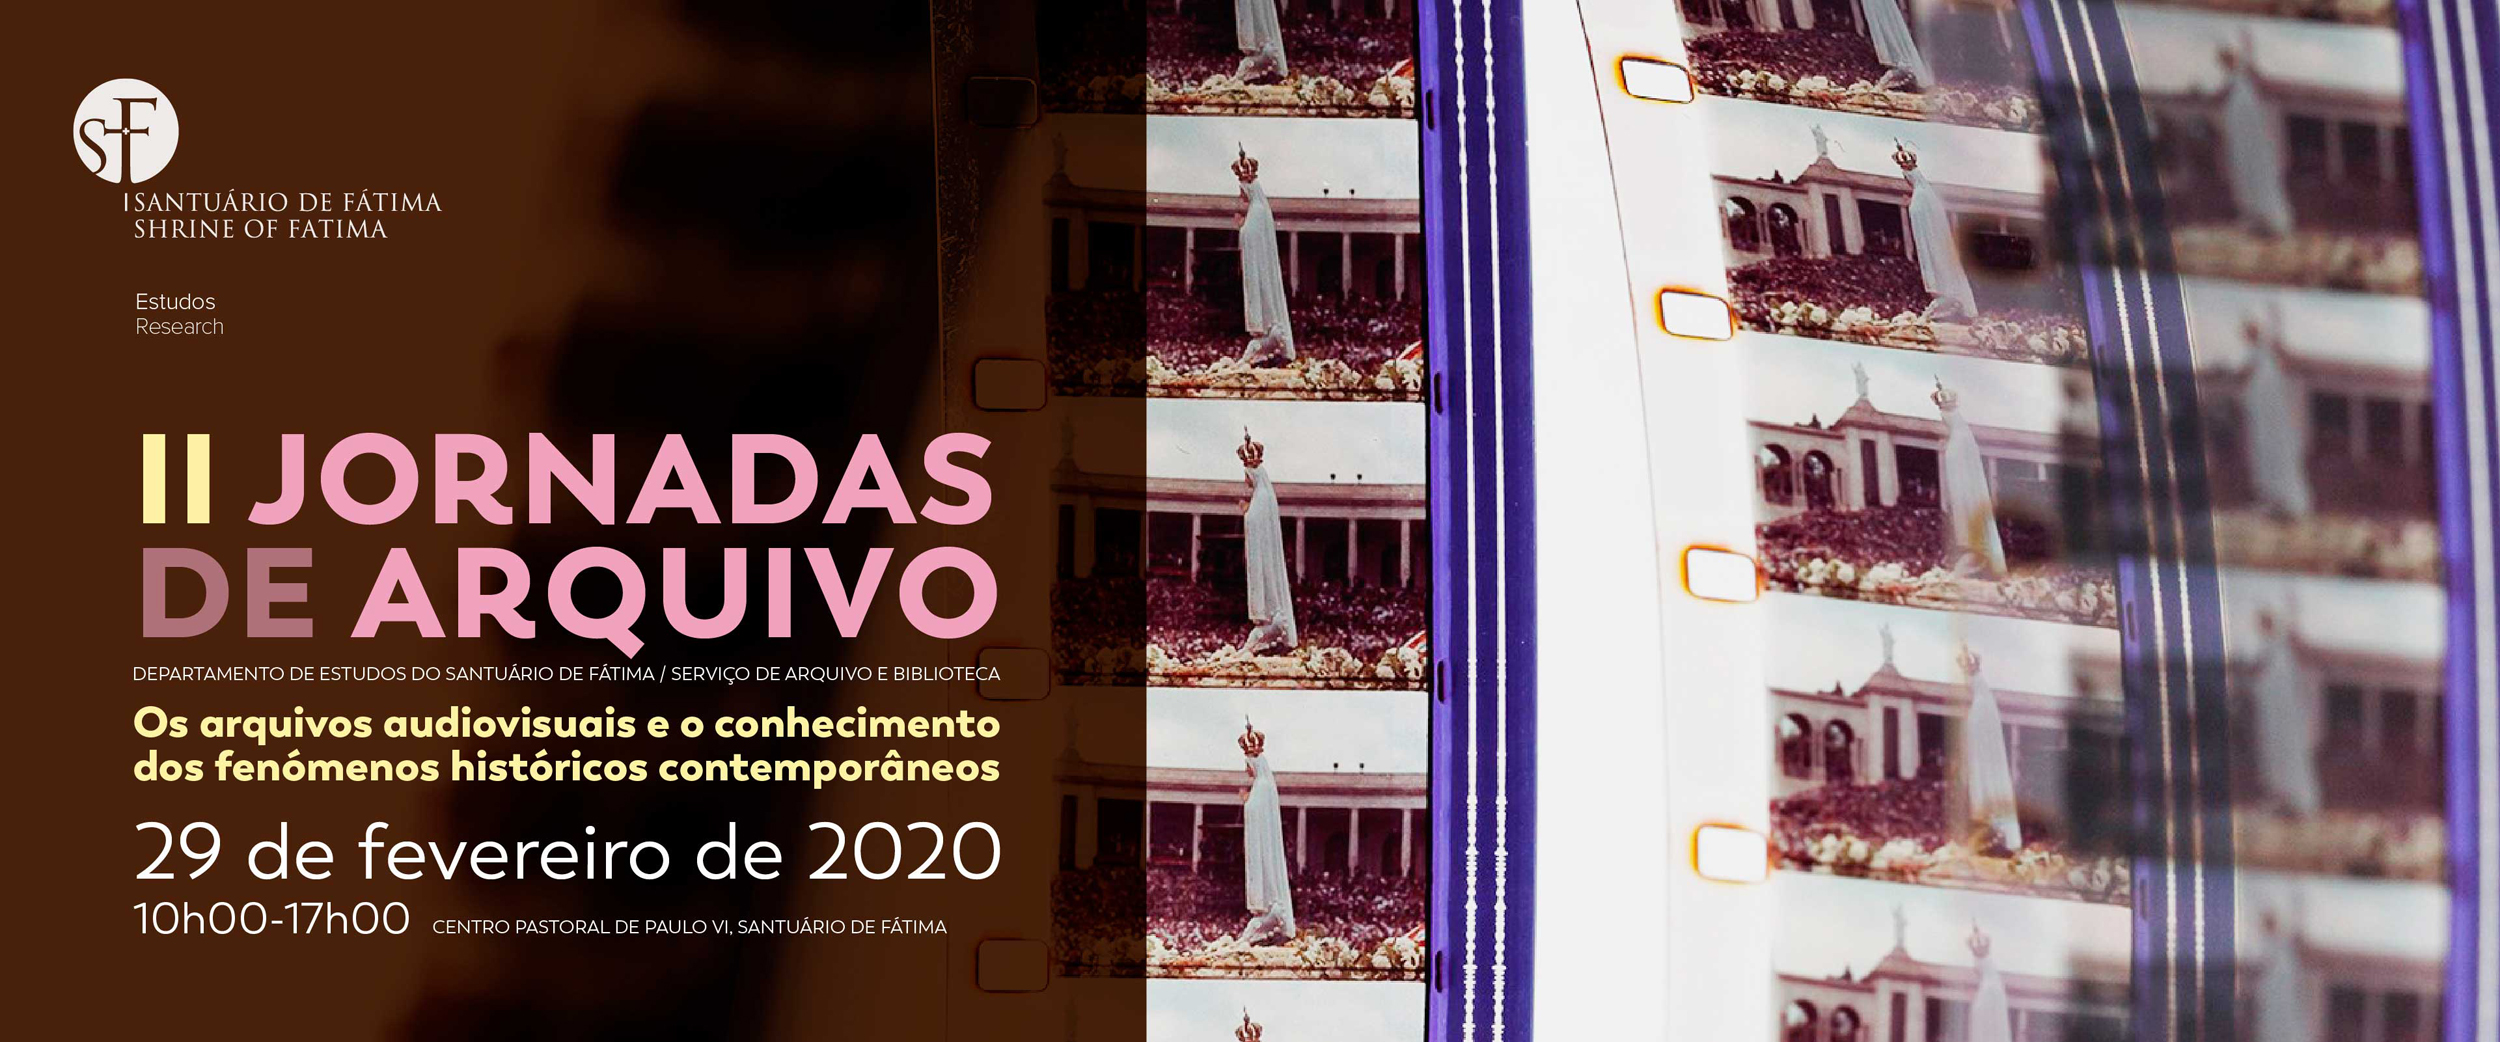 2020-01-29_Jornadas_Arquivo.jpg